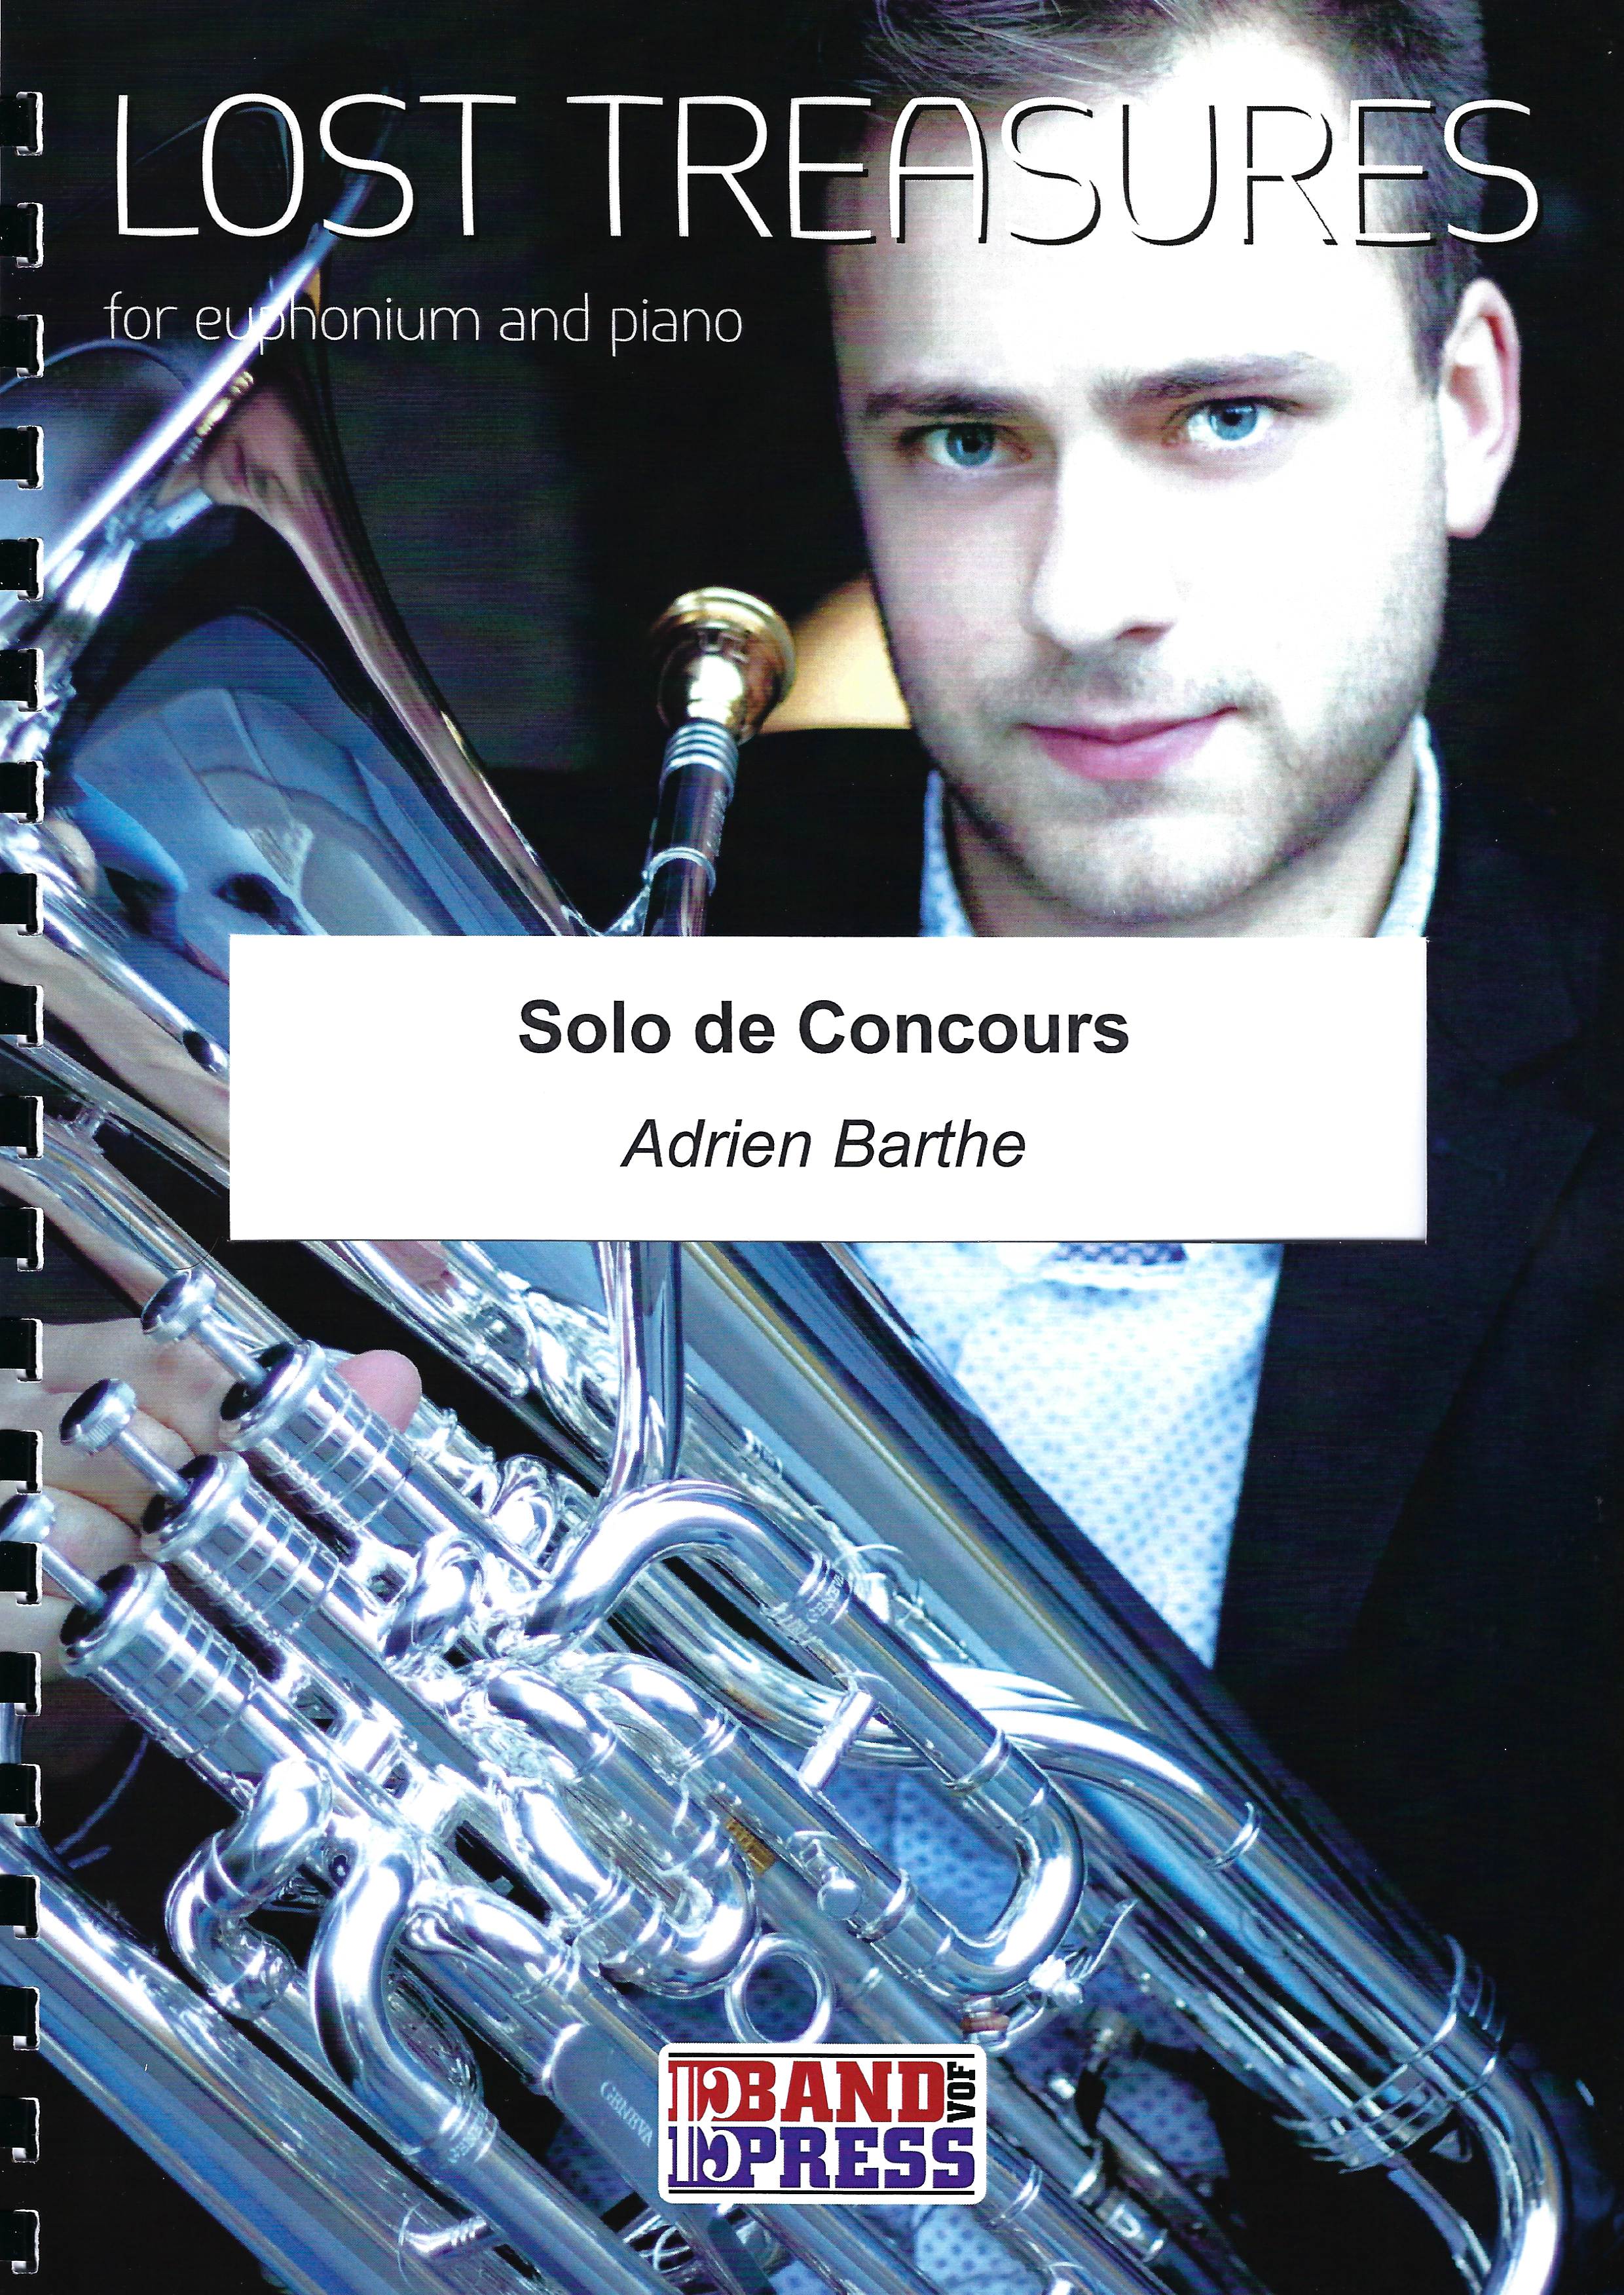 Solo de Concours - Adrien Barthe - Euph and Piano (Lost Treasures Series)